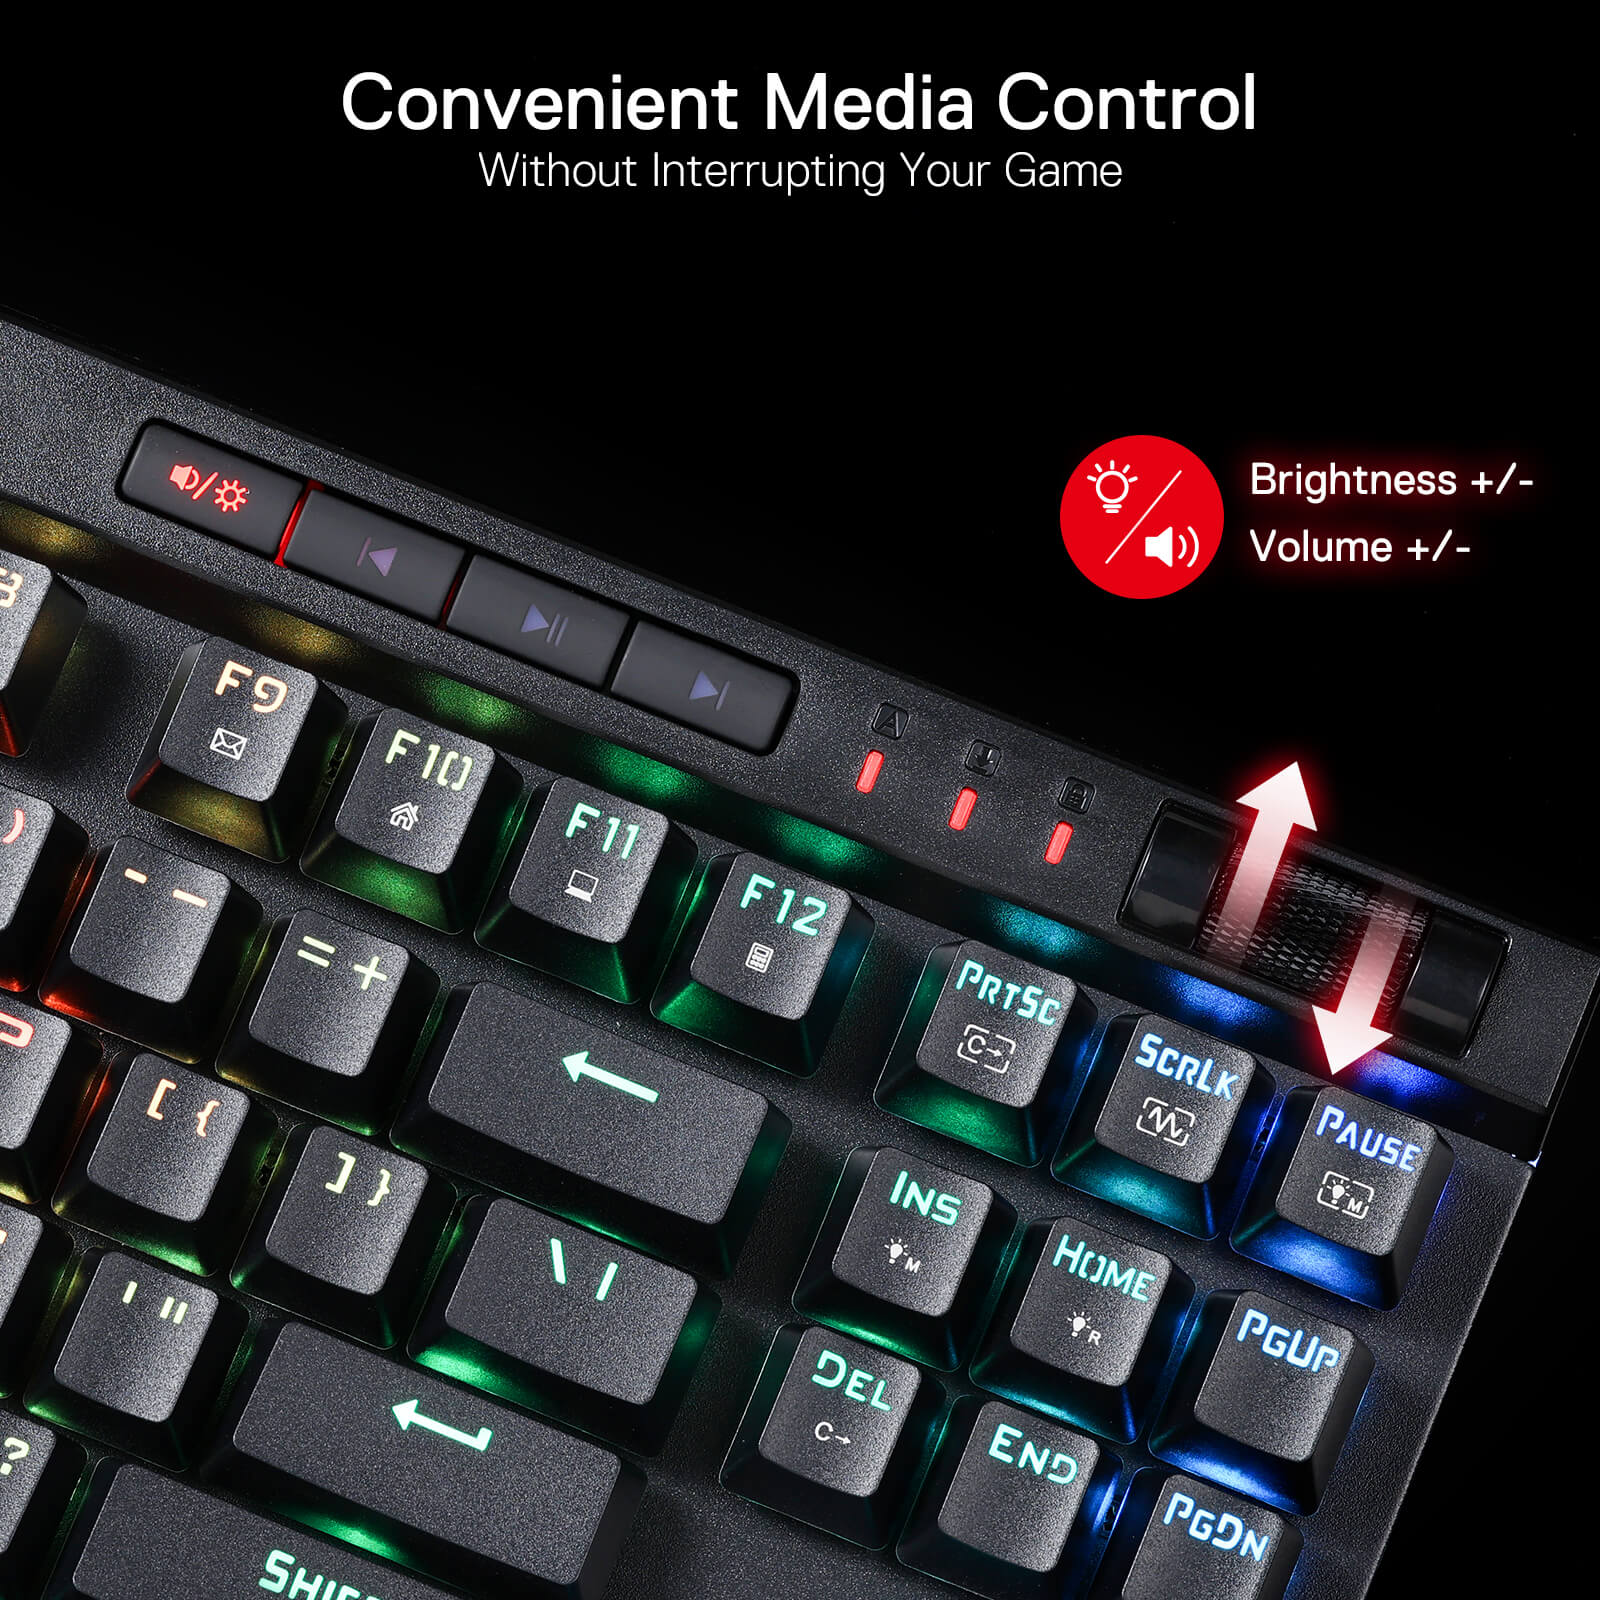 Redragon K587 MAGIC-WAND 87 Keys RGB TKL Mechanical Gaming Keyboard